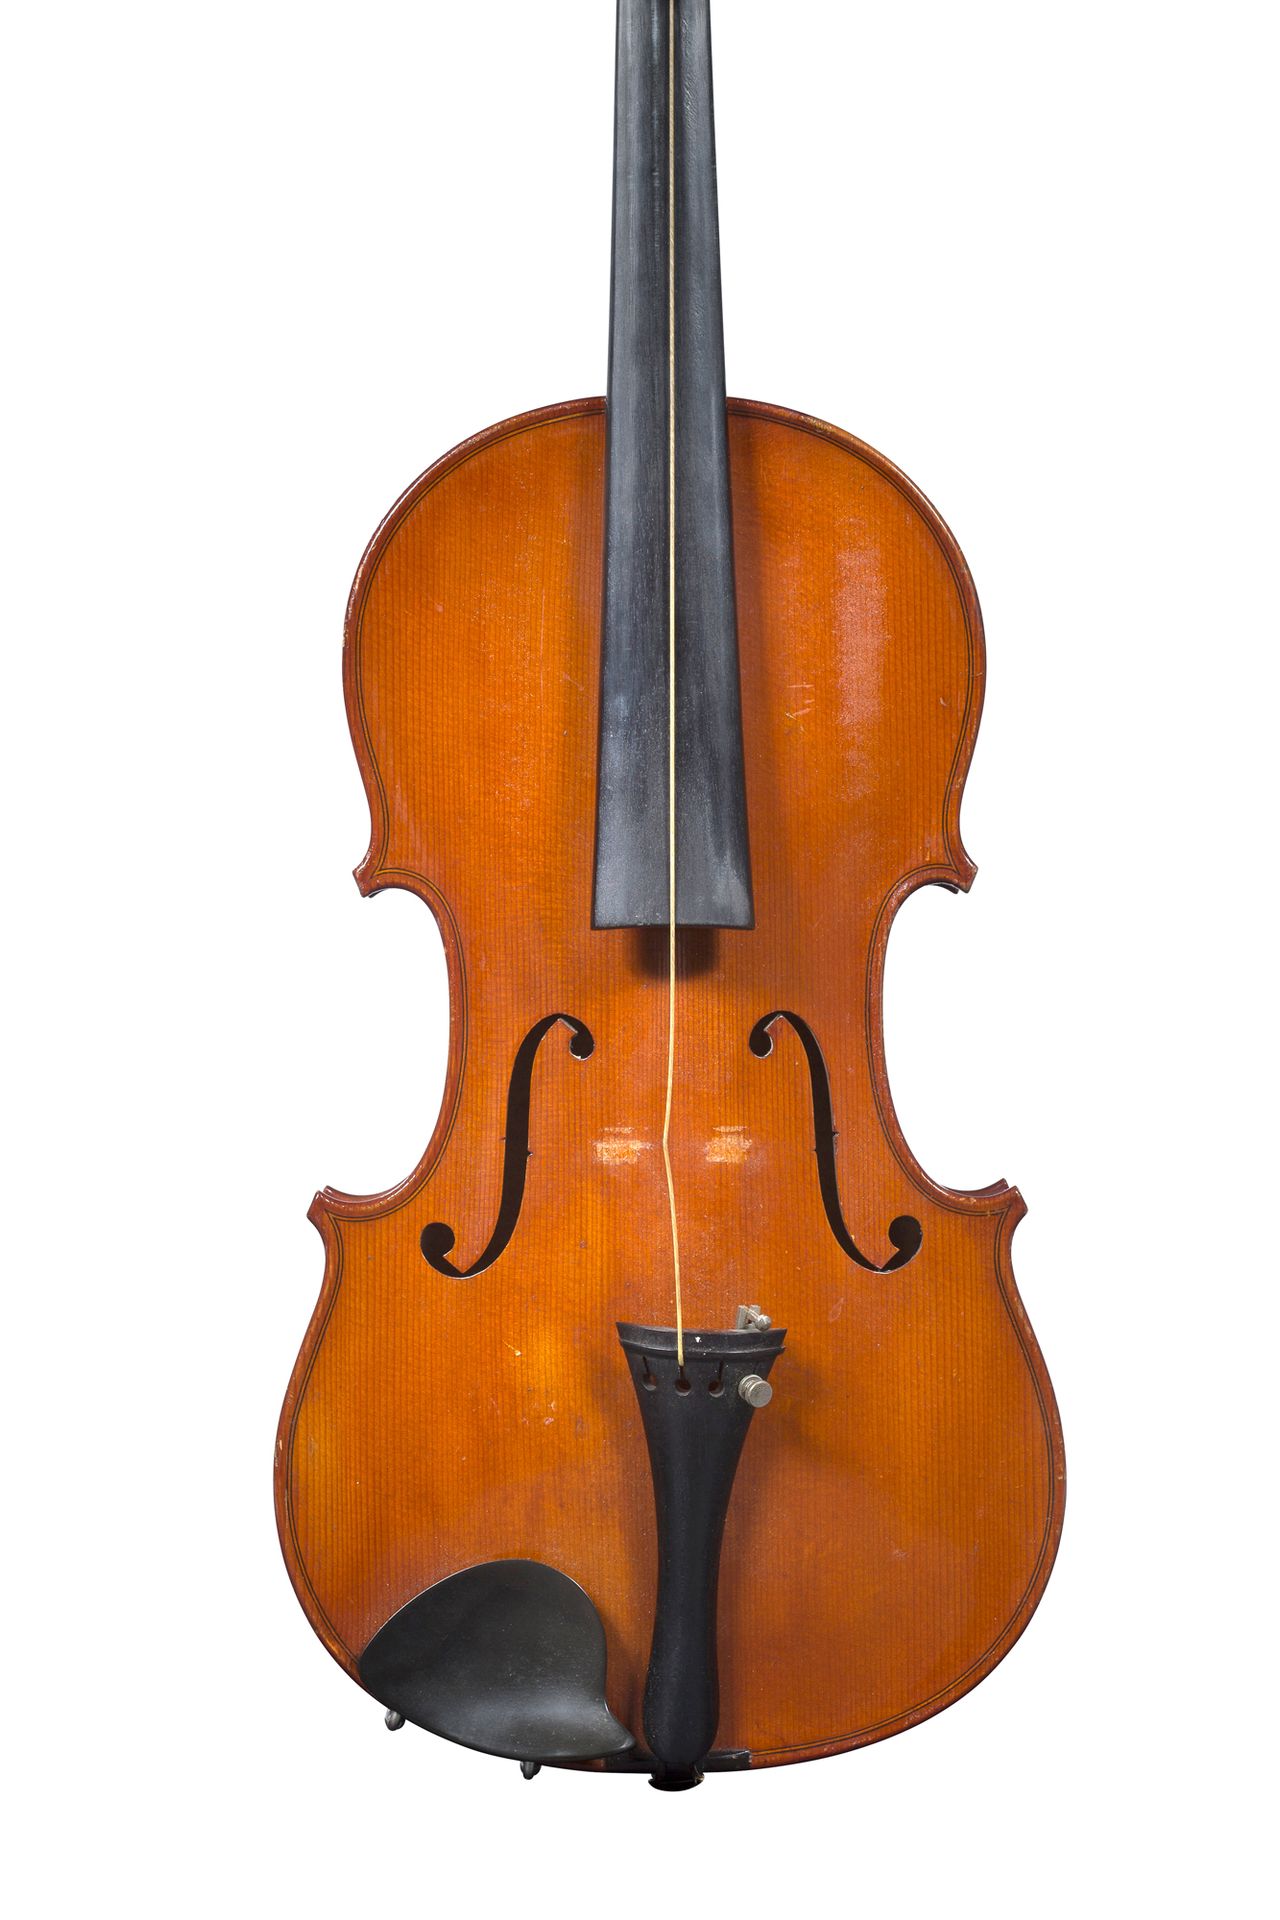 Null 工厂小提琴
20世纪初在Mirecourt制造
状况极佳 
背面有358毫米
附有学习用弓